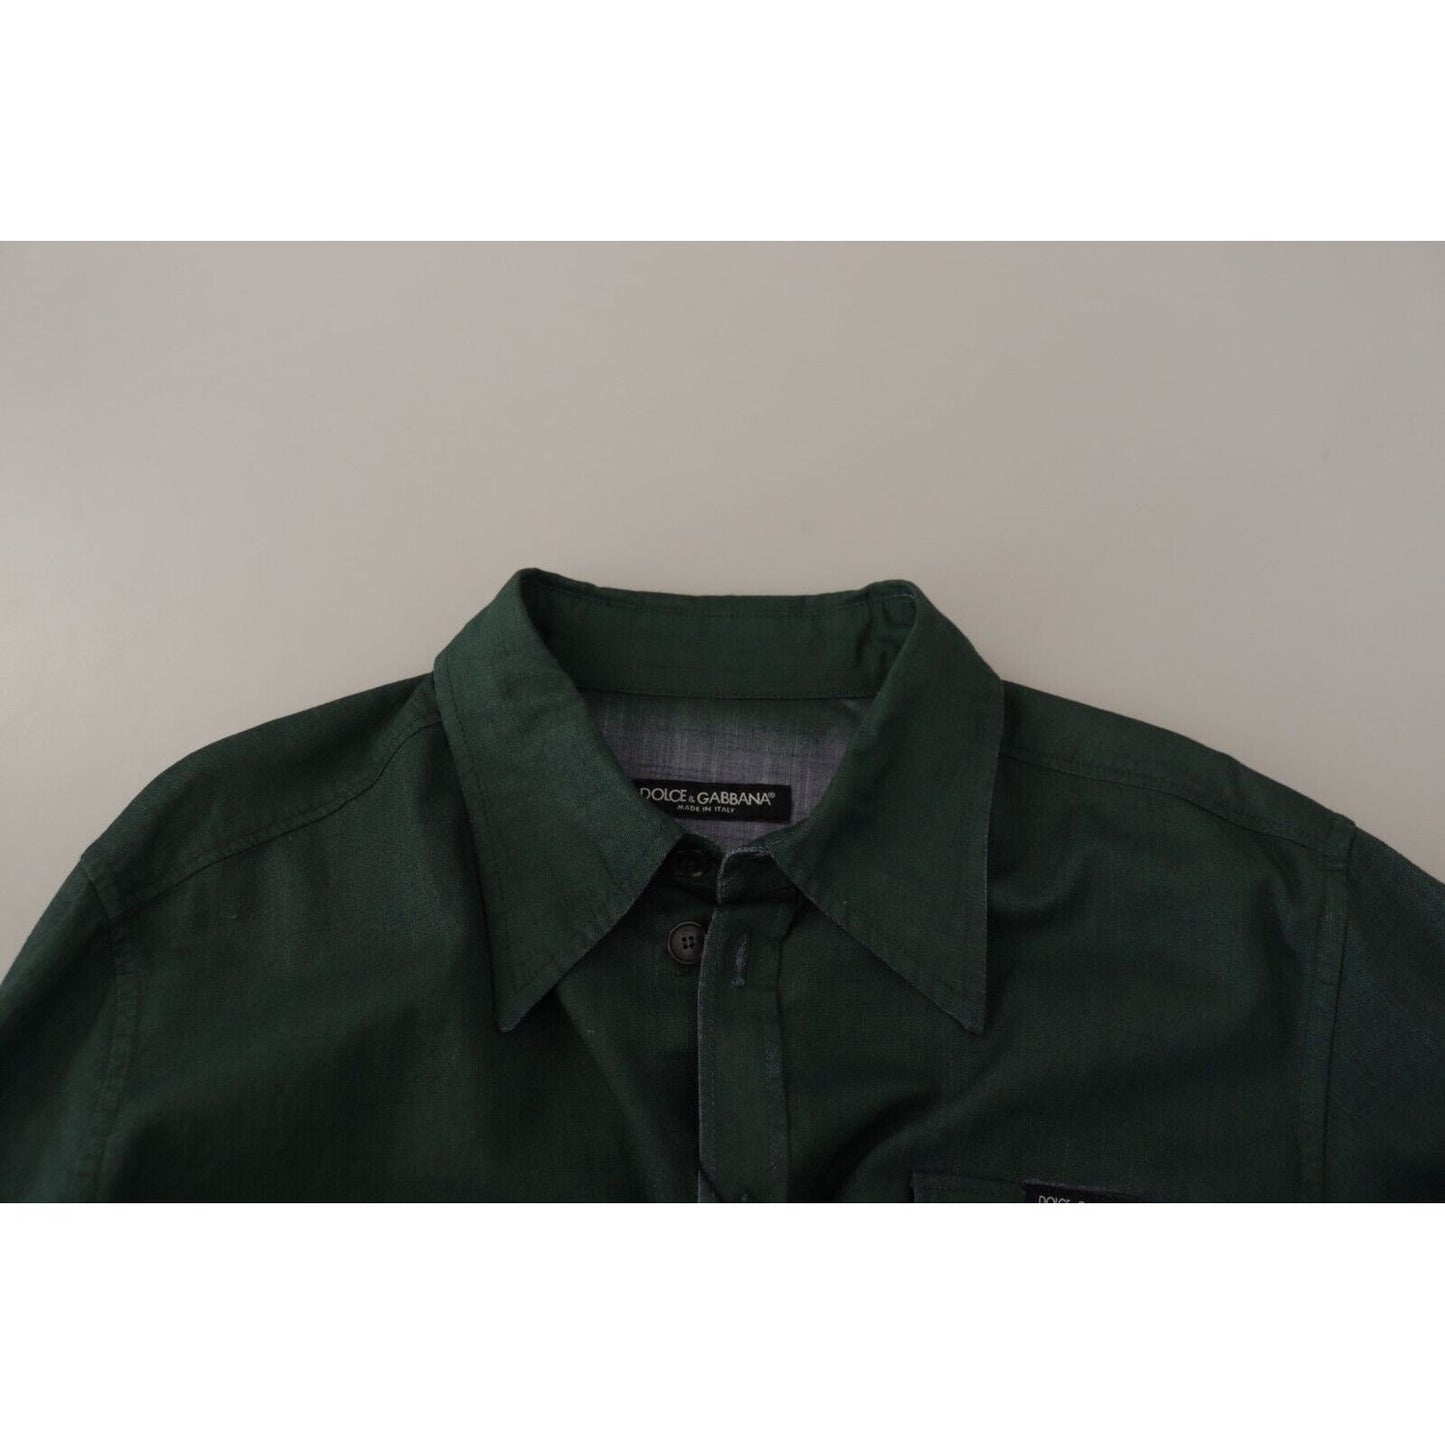 Dolce & Gabbana Emerald Elegance Slim Fit Casual Shirt dark-green-button-down-long-sleeves-shirt